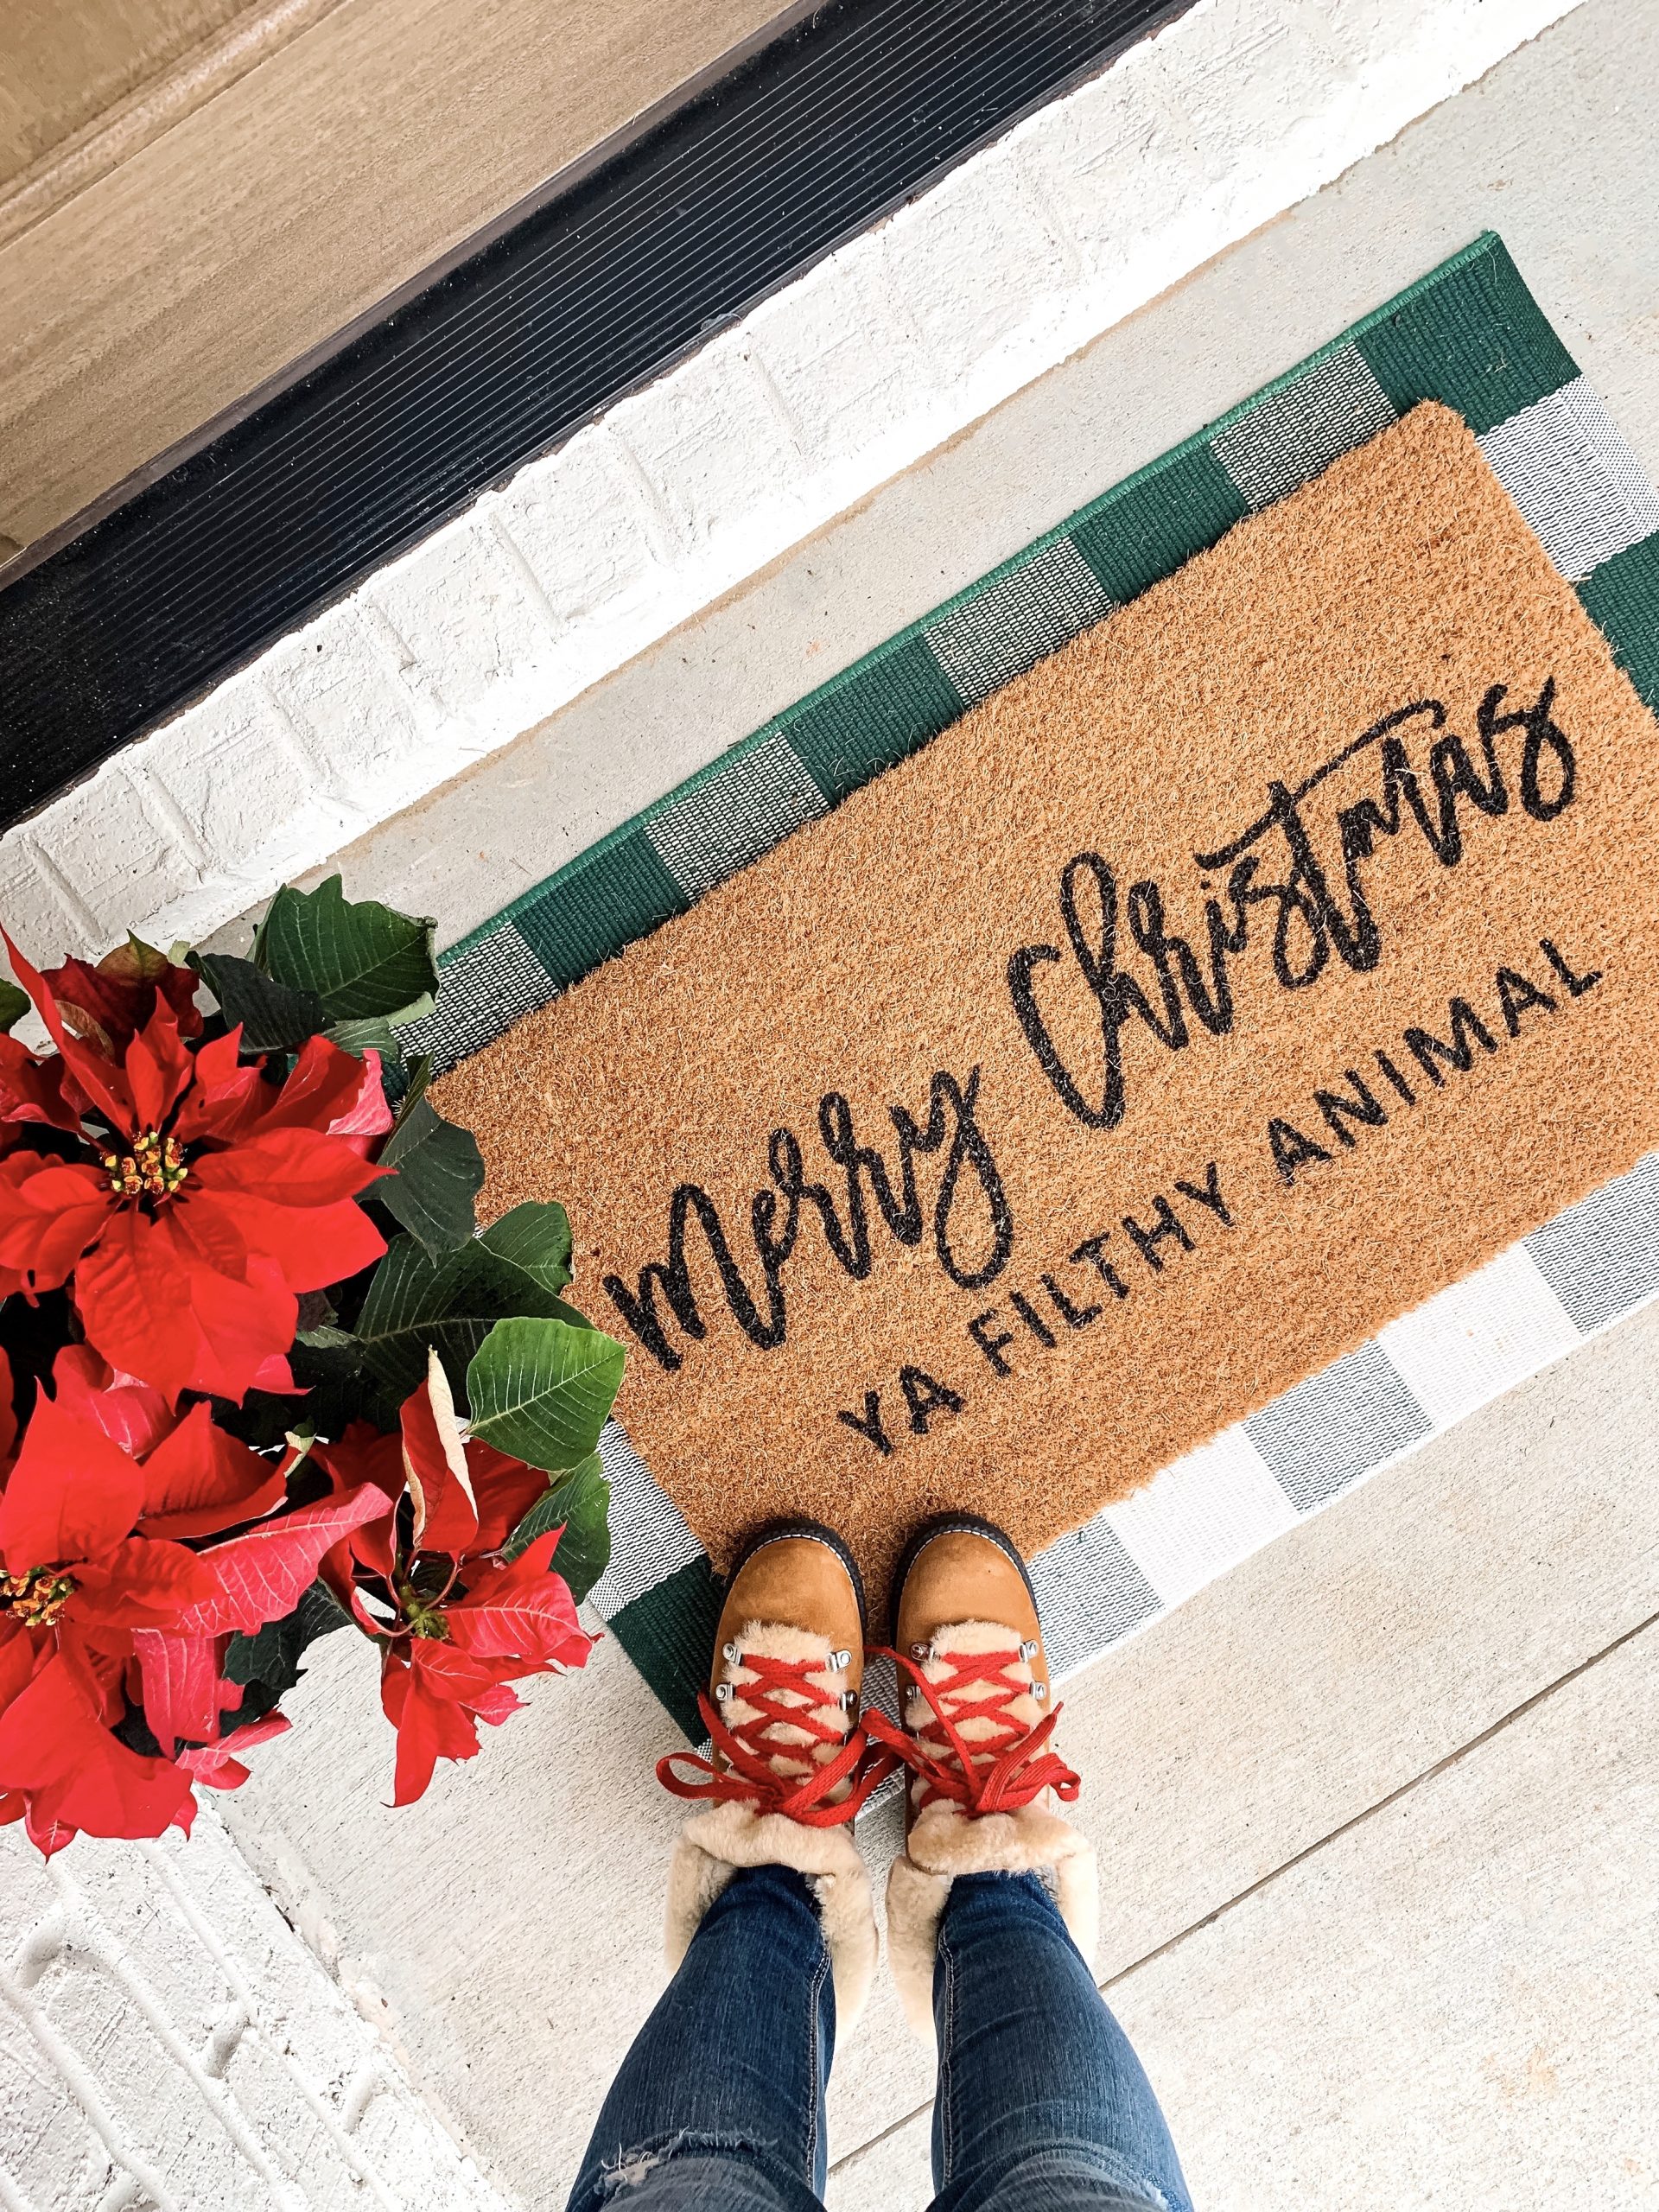 merry christmas ya filthy animal doormat, Christmas doormat